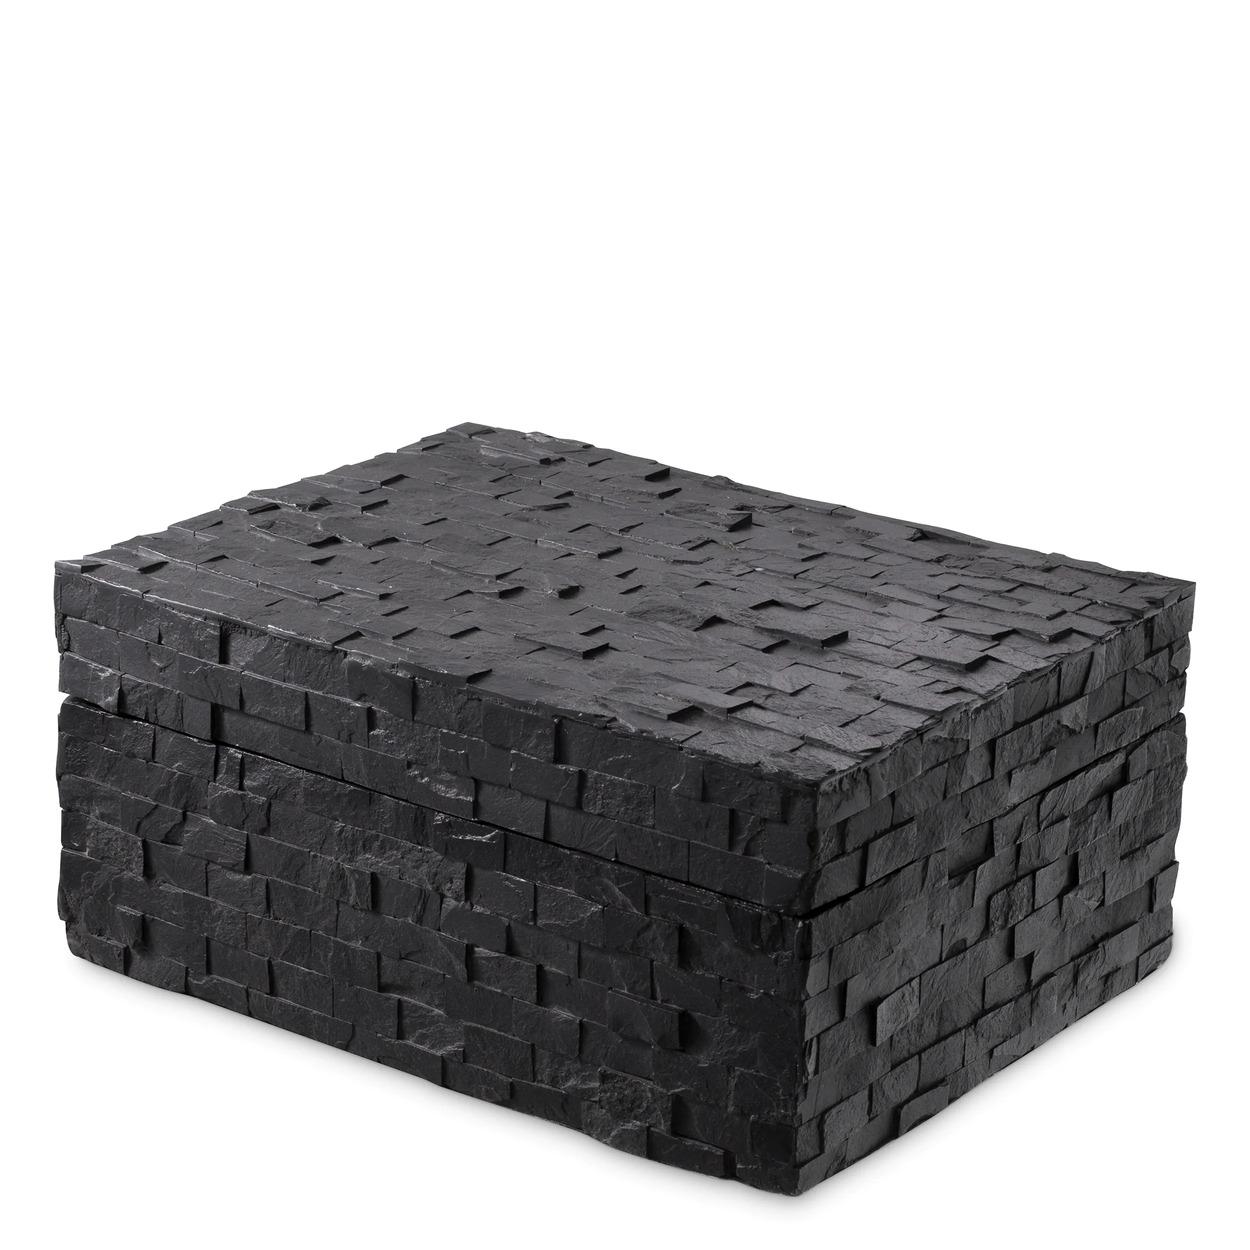 Box

Mango wood / black finish

Dimensions: length: 28,5 / width: 22 / height 13 cm.